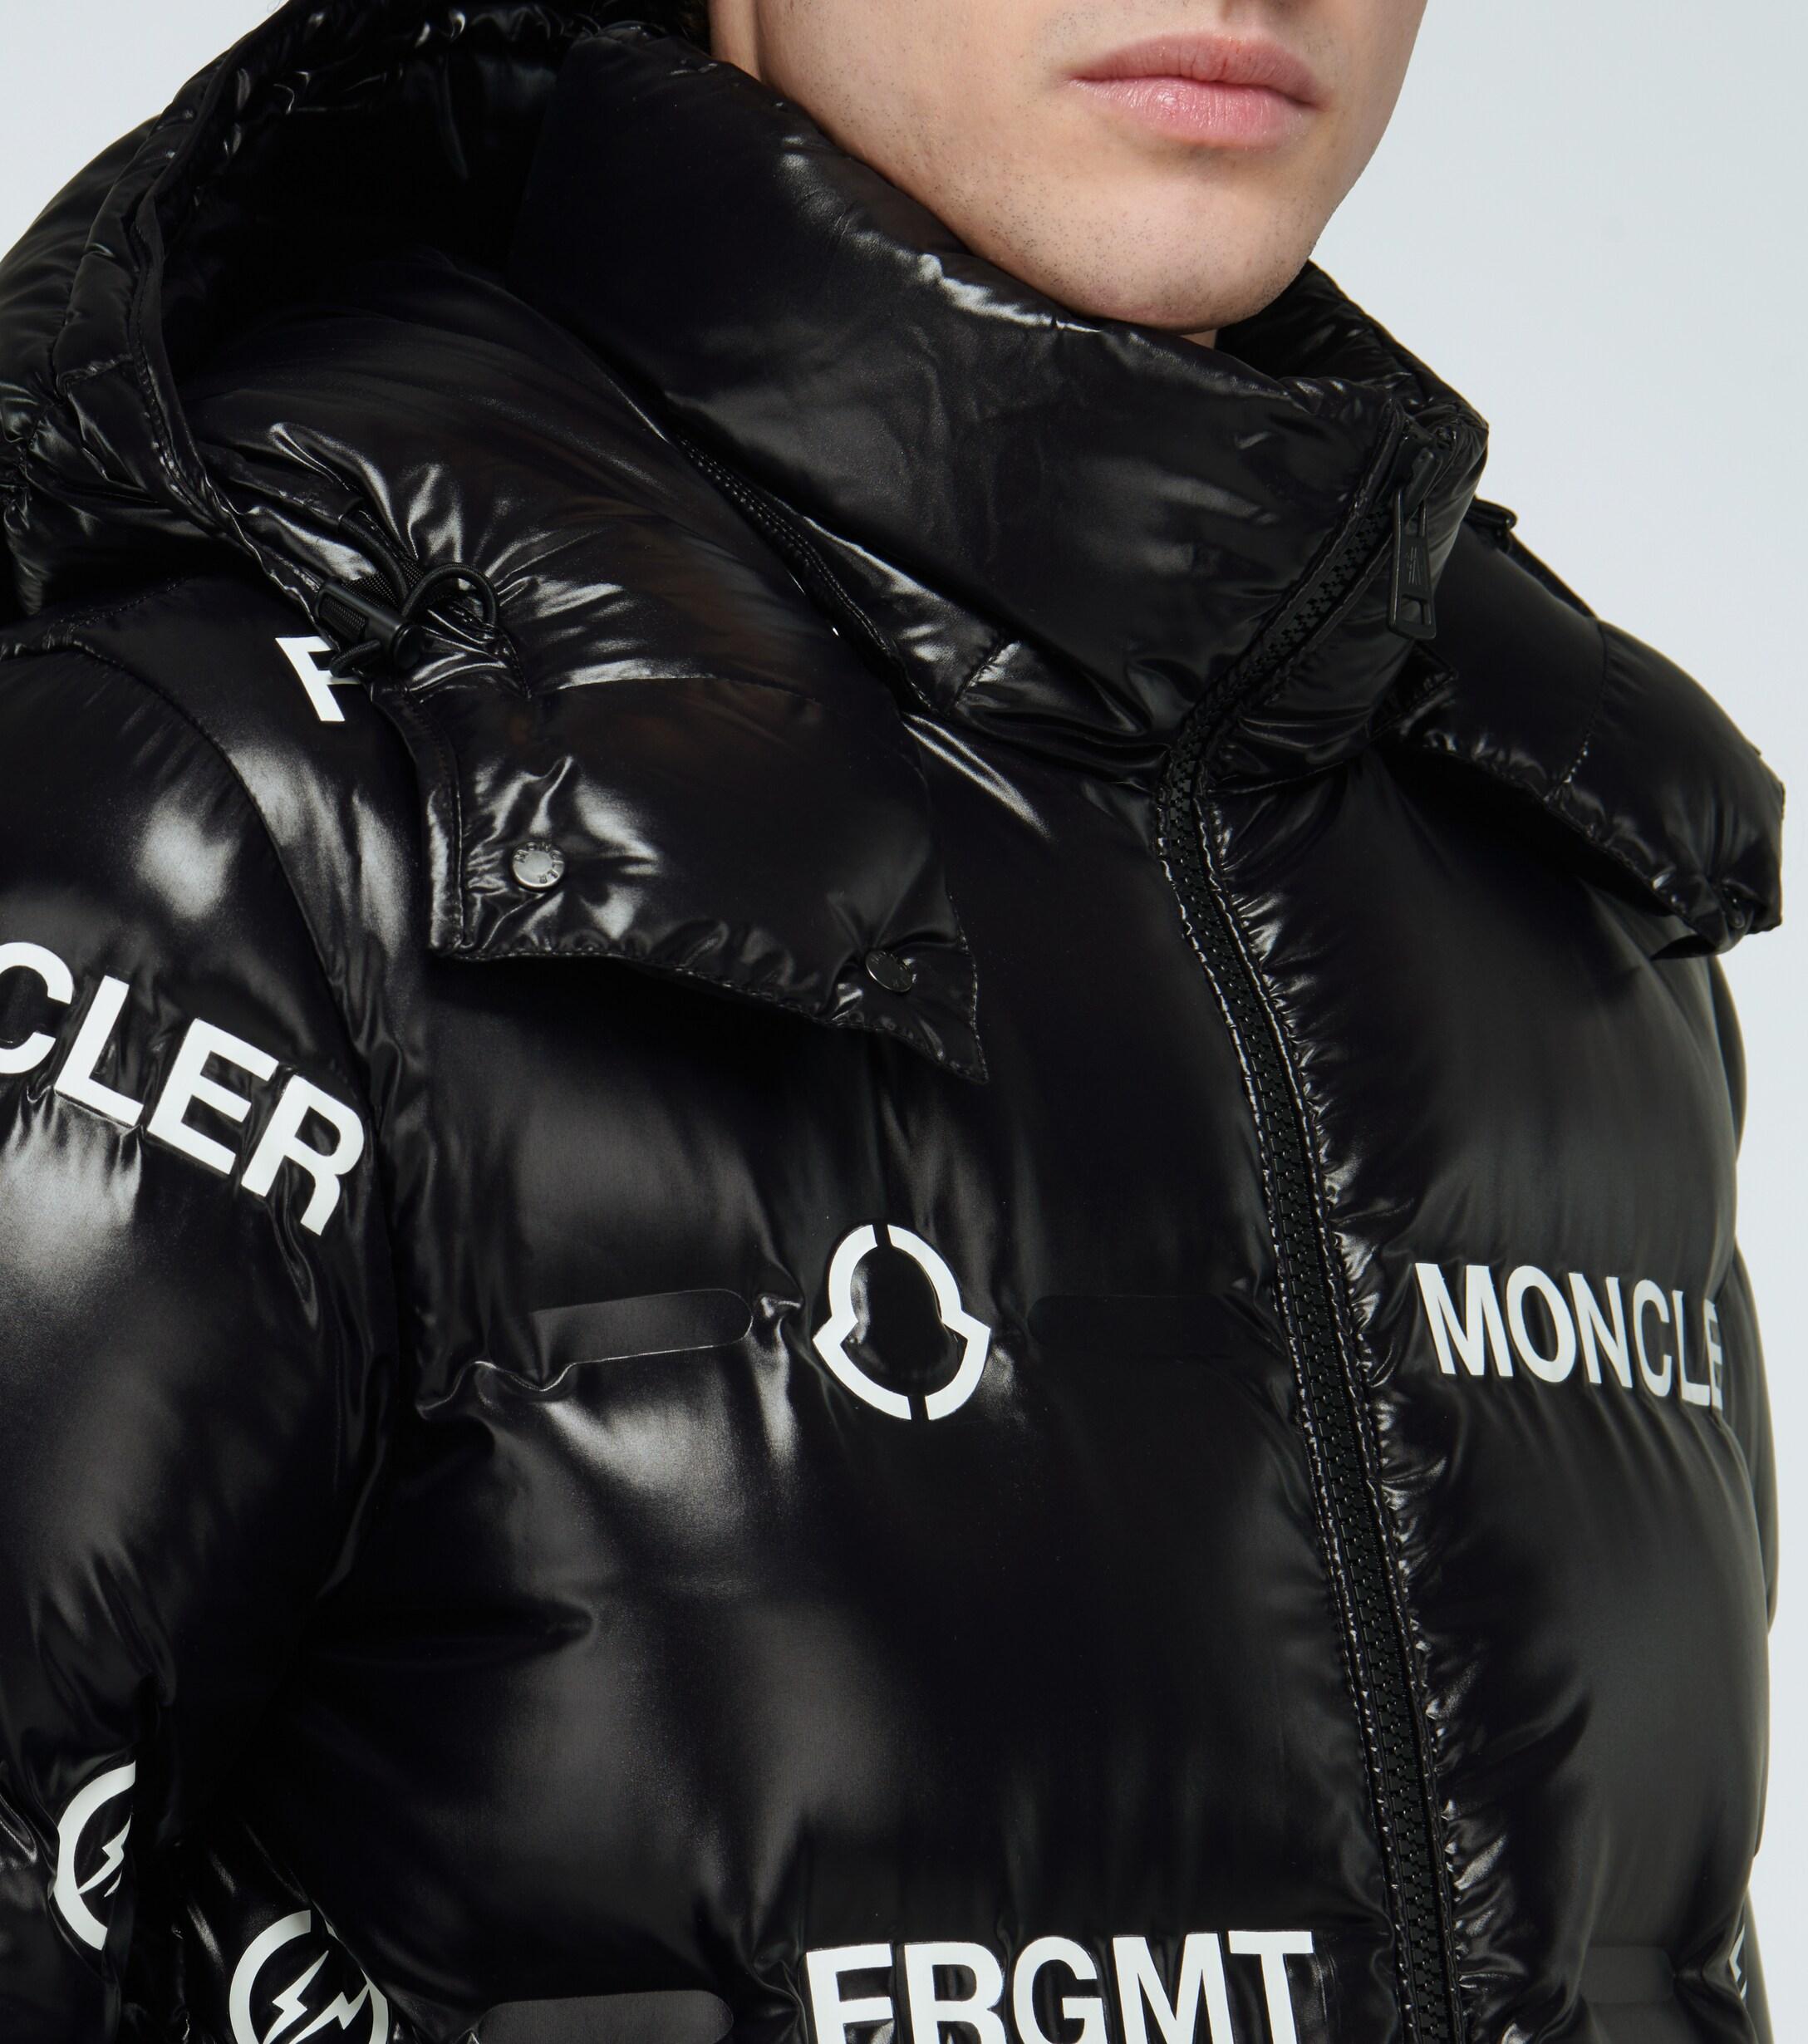 Moncler Genius 7 Moncler Fragment Mayconne Puffer Jacket in Black 